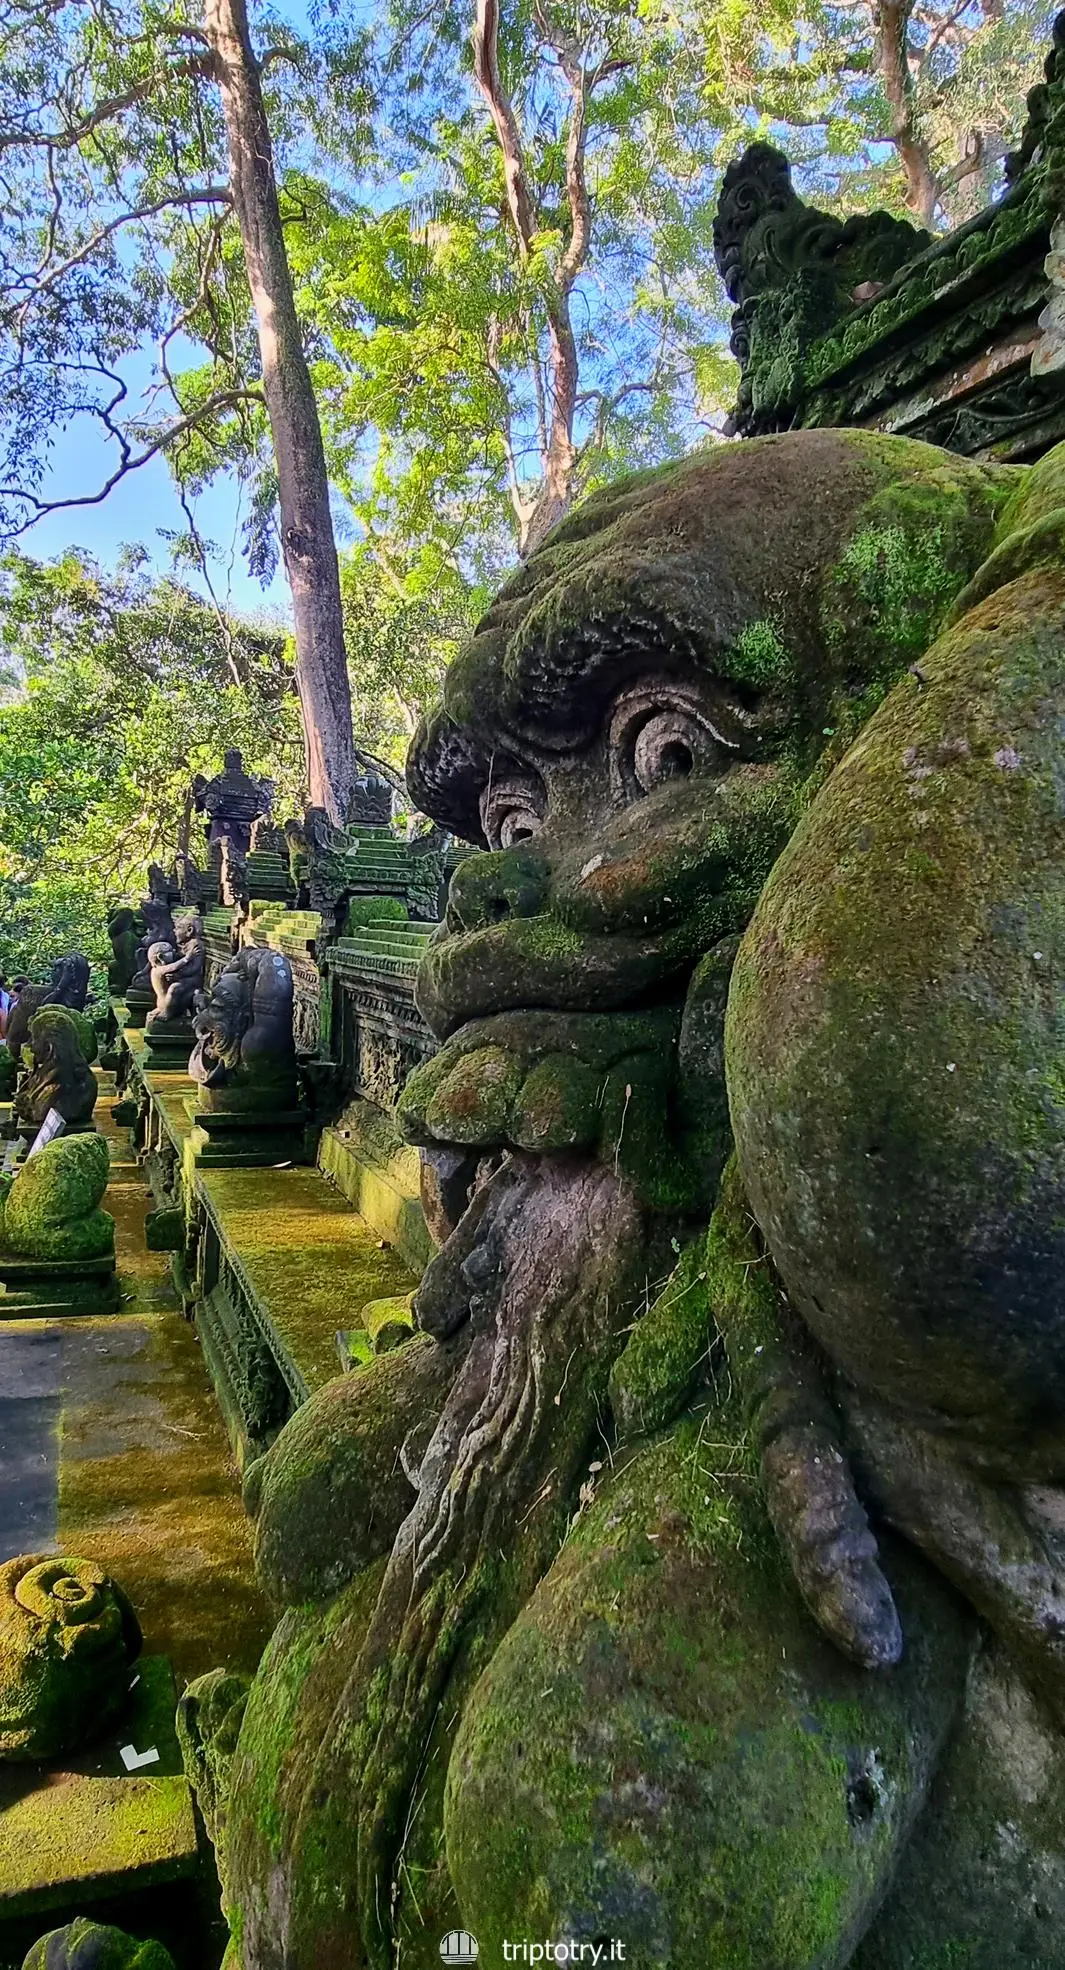 Foresta delle scimmie Ubud statue hindu - visit ubud monkey forest